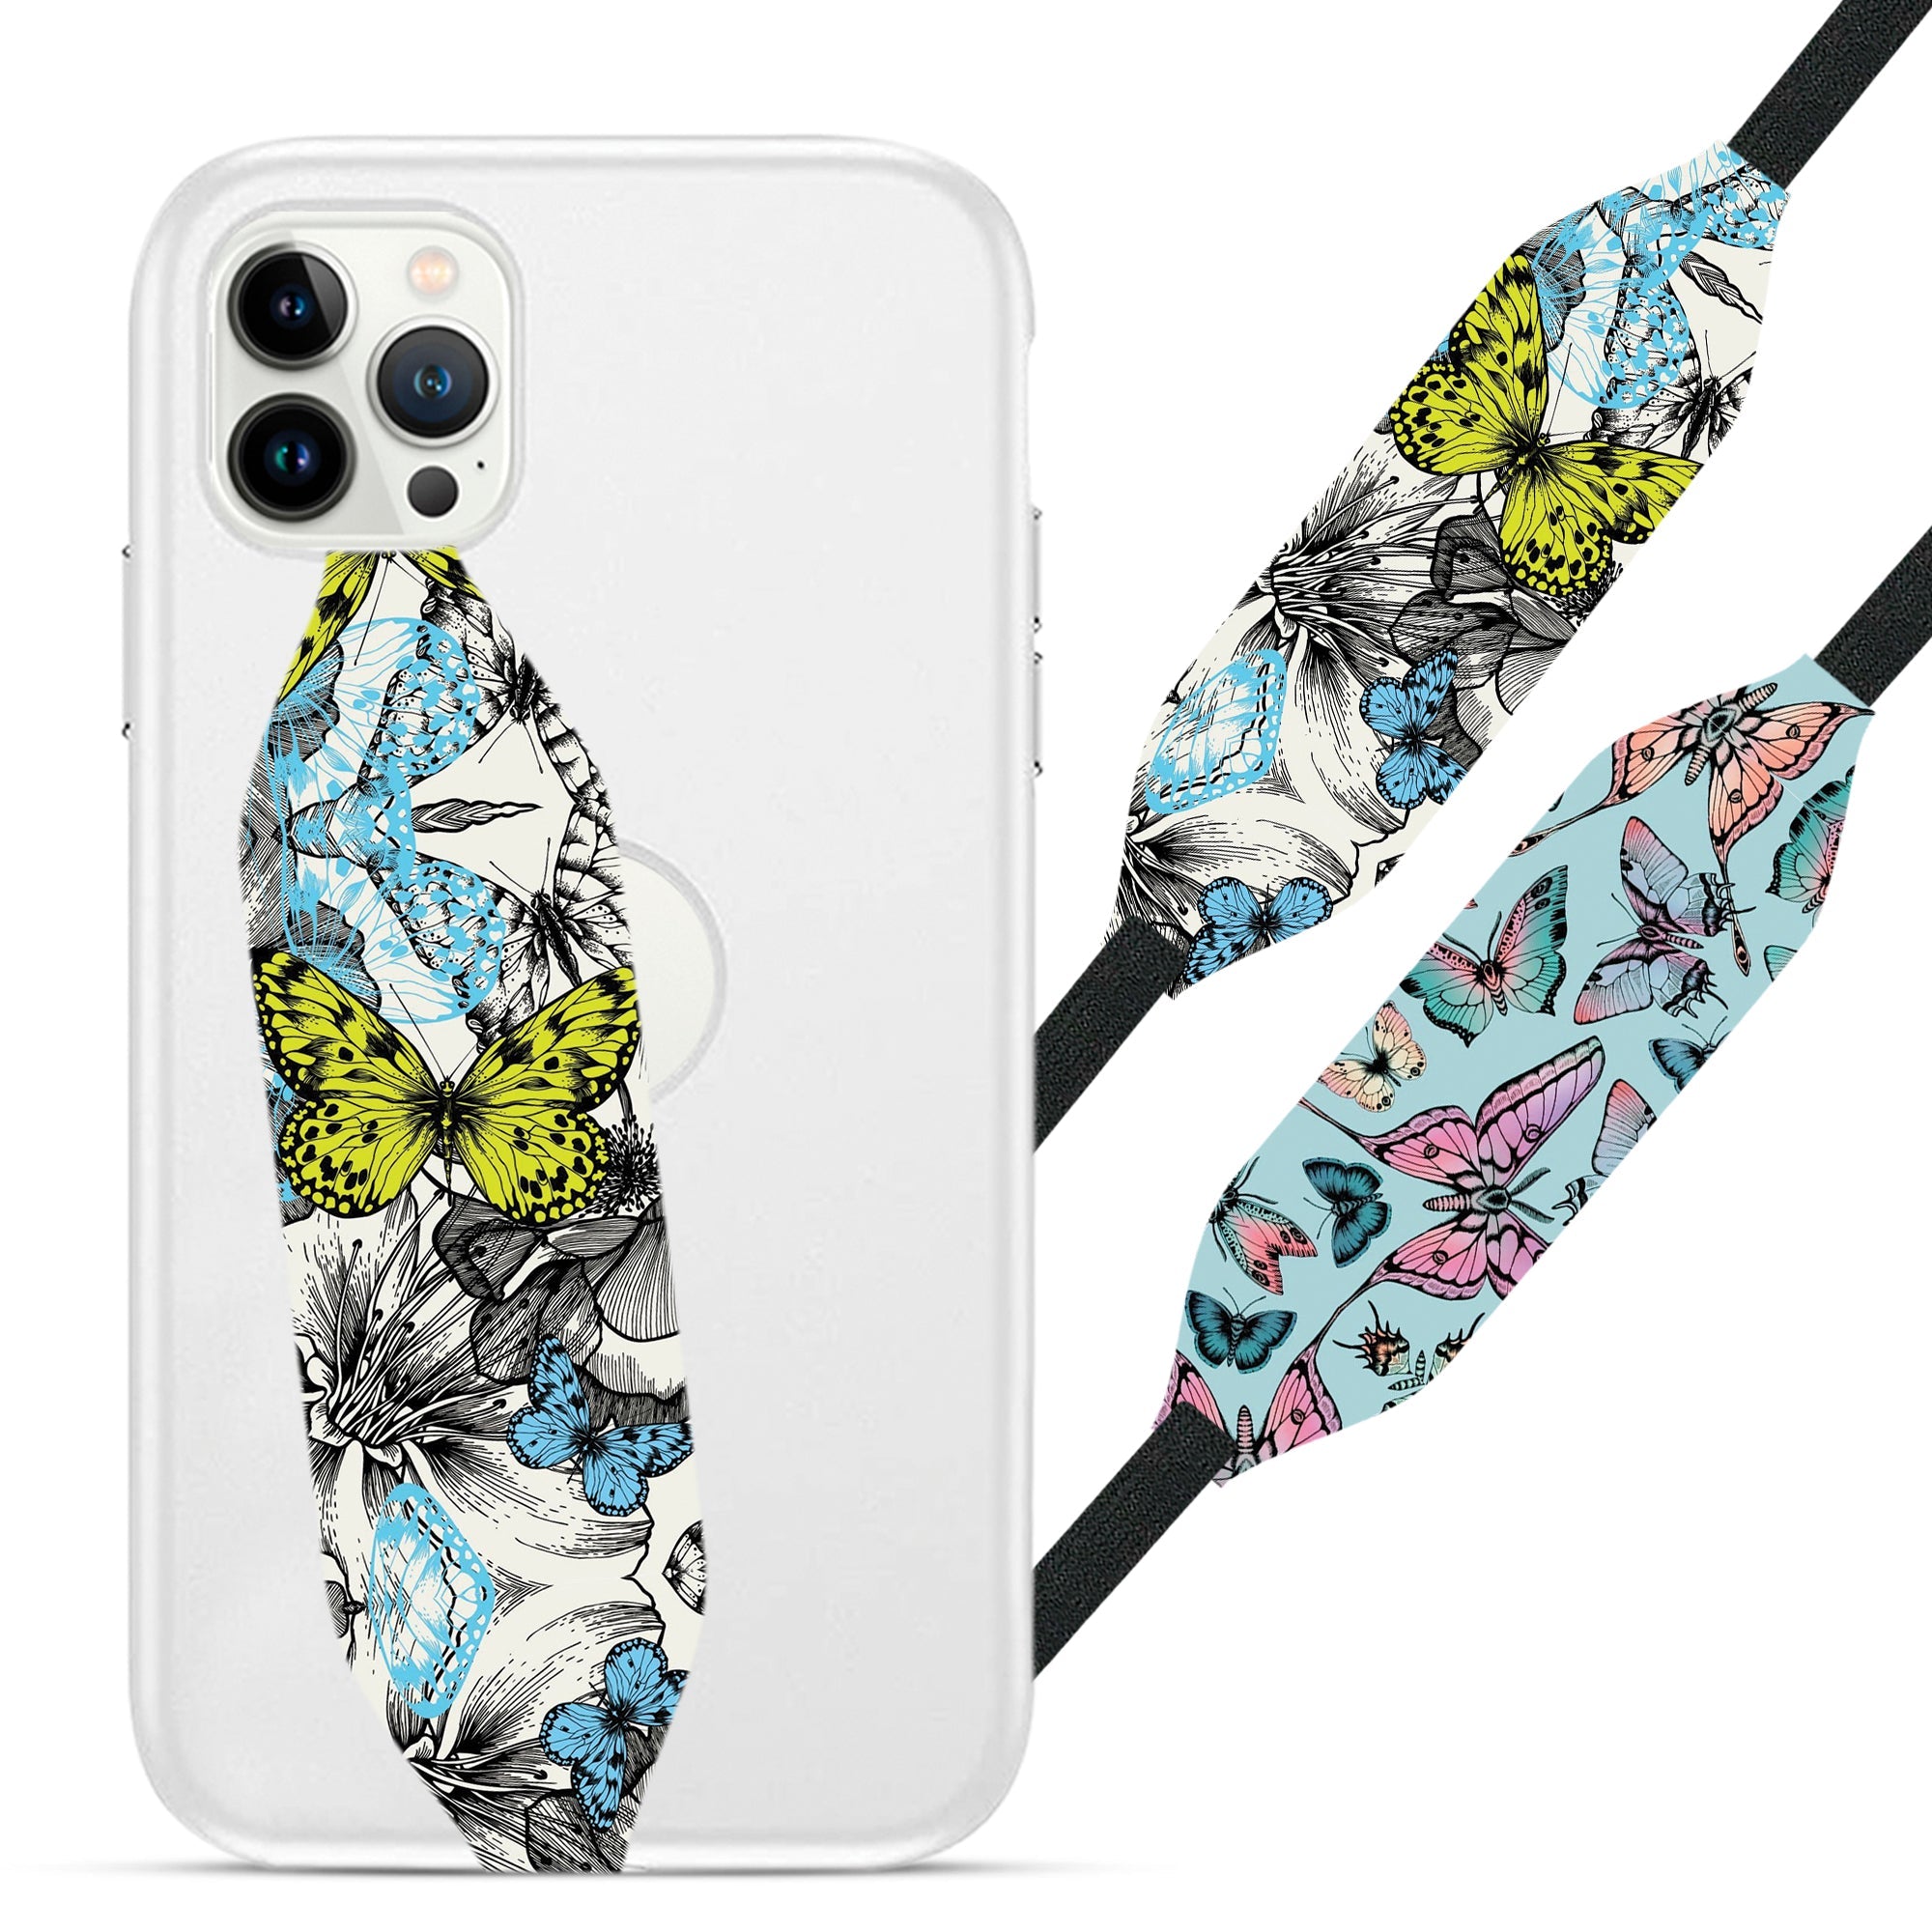 Universal Phone Grip Strap - Butterfly Pattern